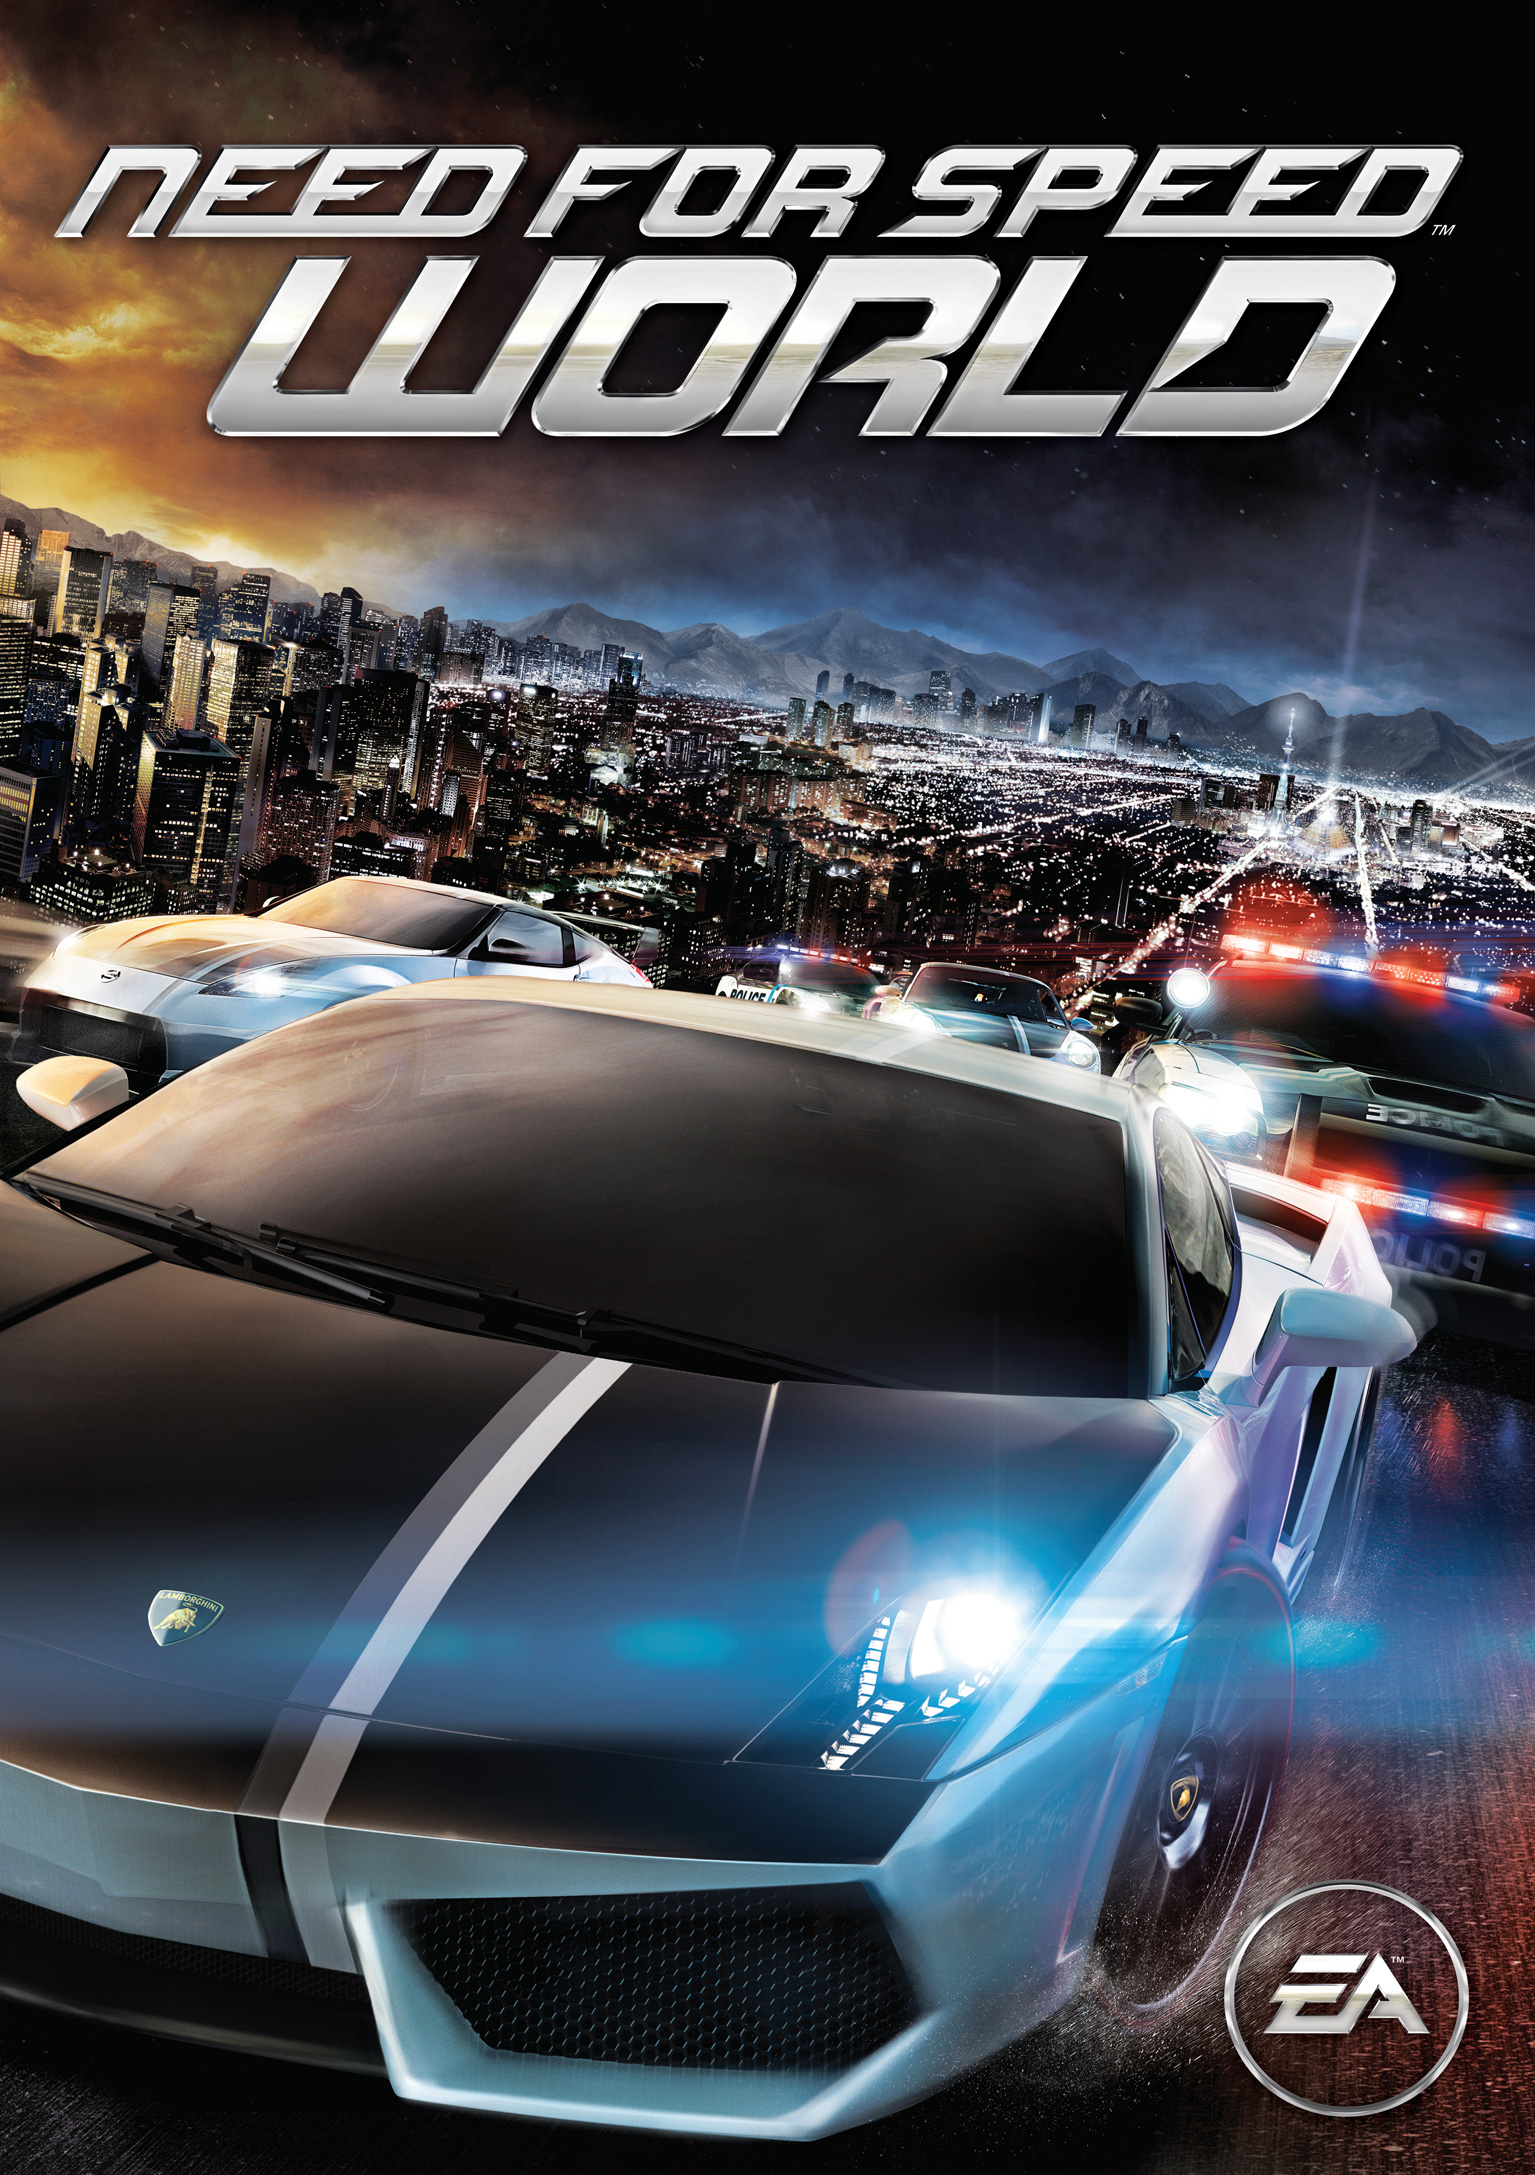 Speed main. Нид фор СПИД игра. NFS обложка. Need for Speed World. Need for Speed диск.